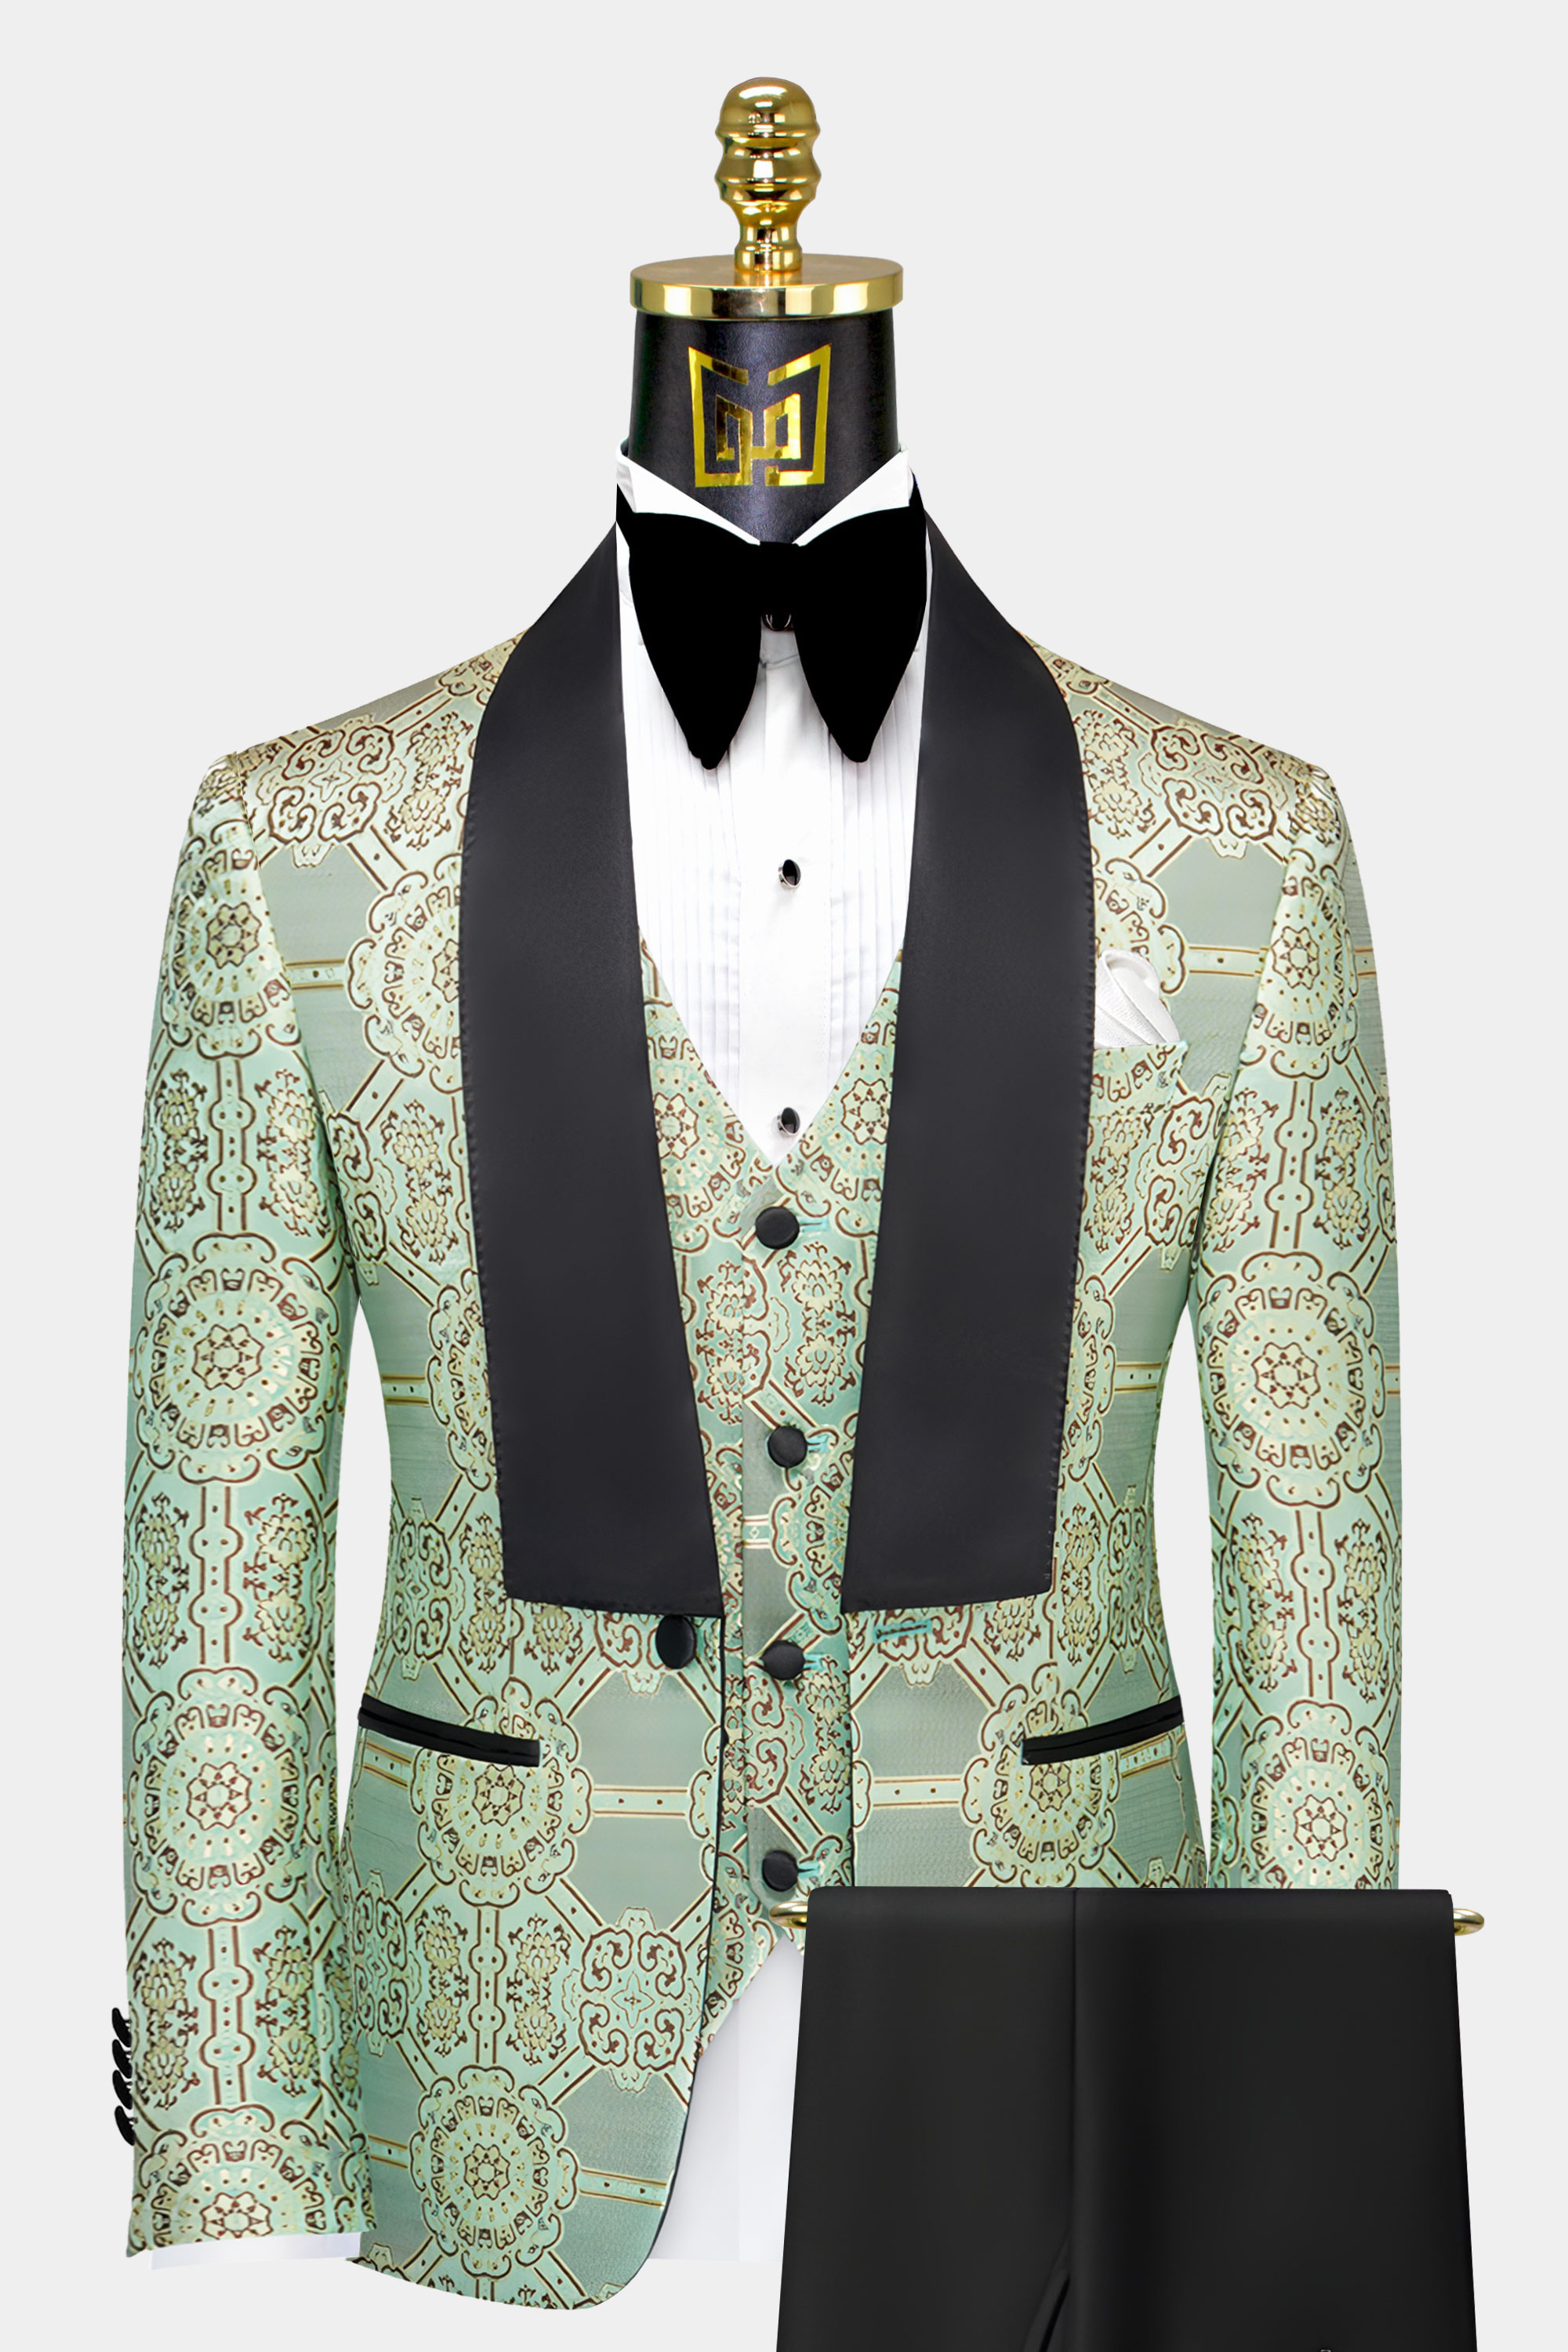 Black-Pant-Mint-Green-Tuxedo-Suit-Prom-Wedding-Groom-Attire-from-Gentlemansguru.com